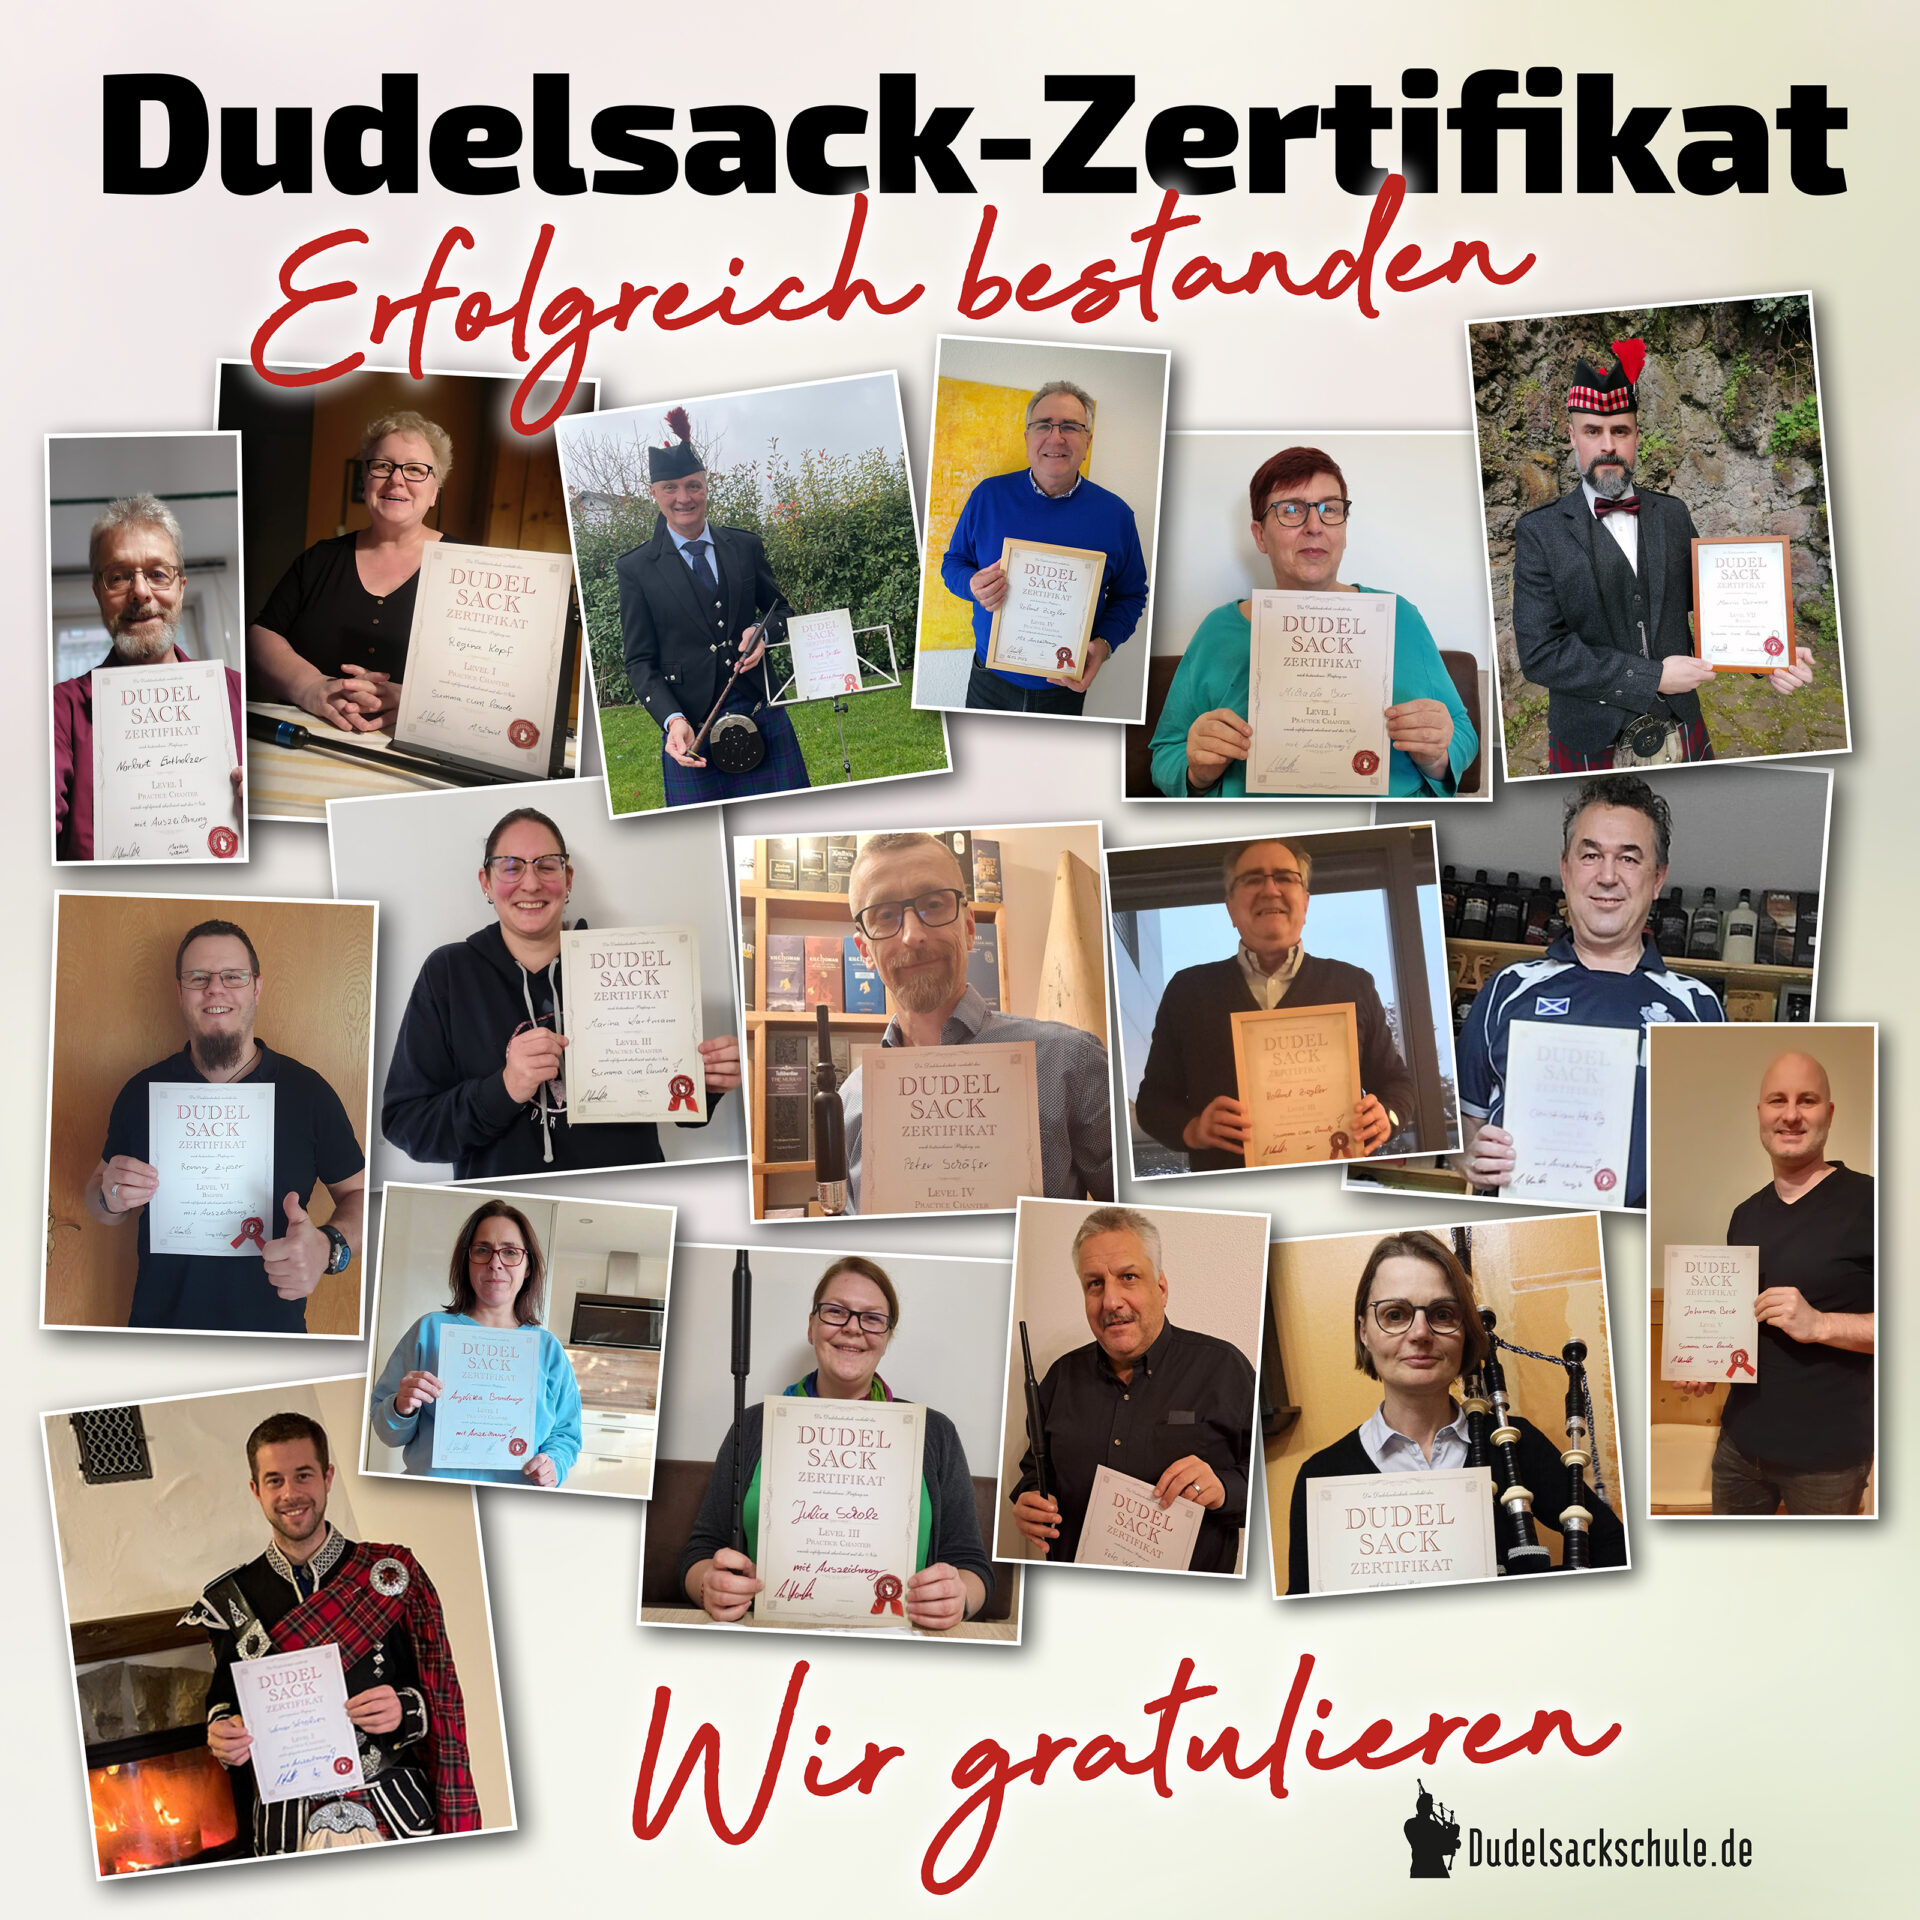 Dudelsack-Zertifikat